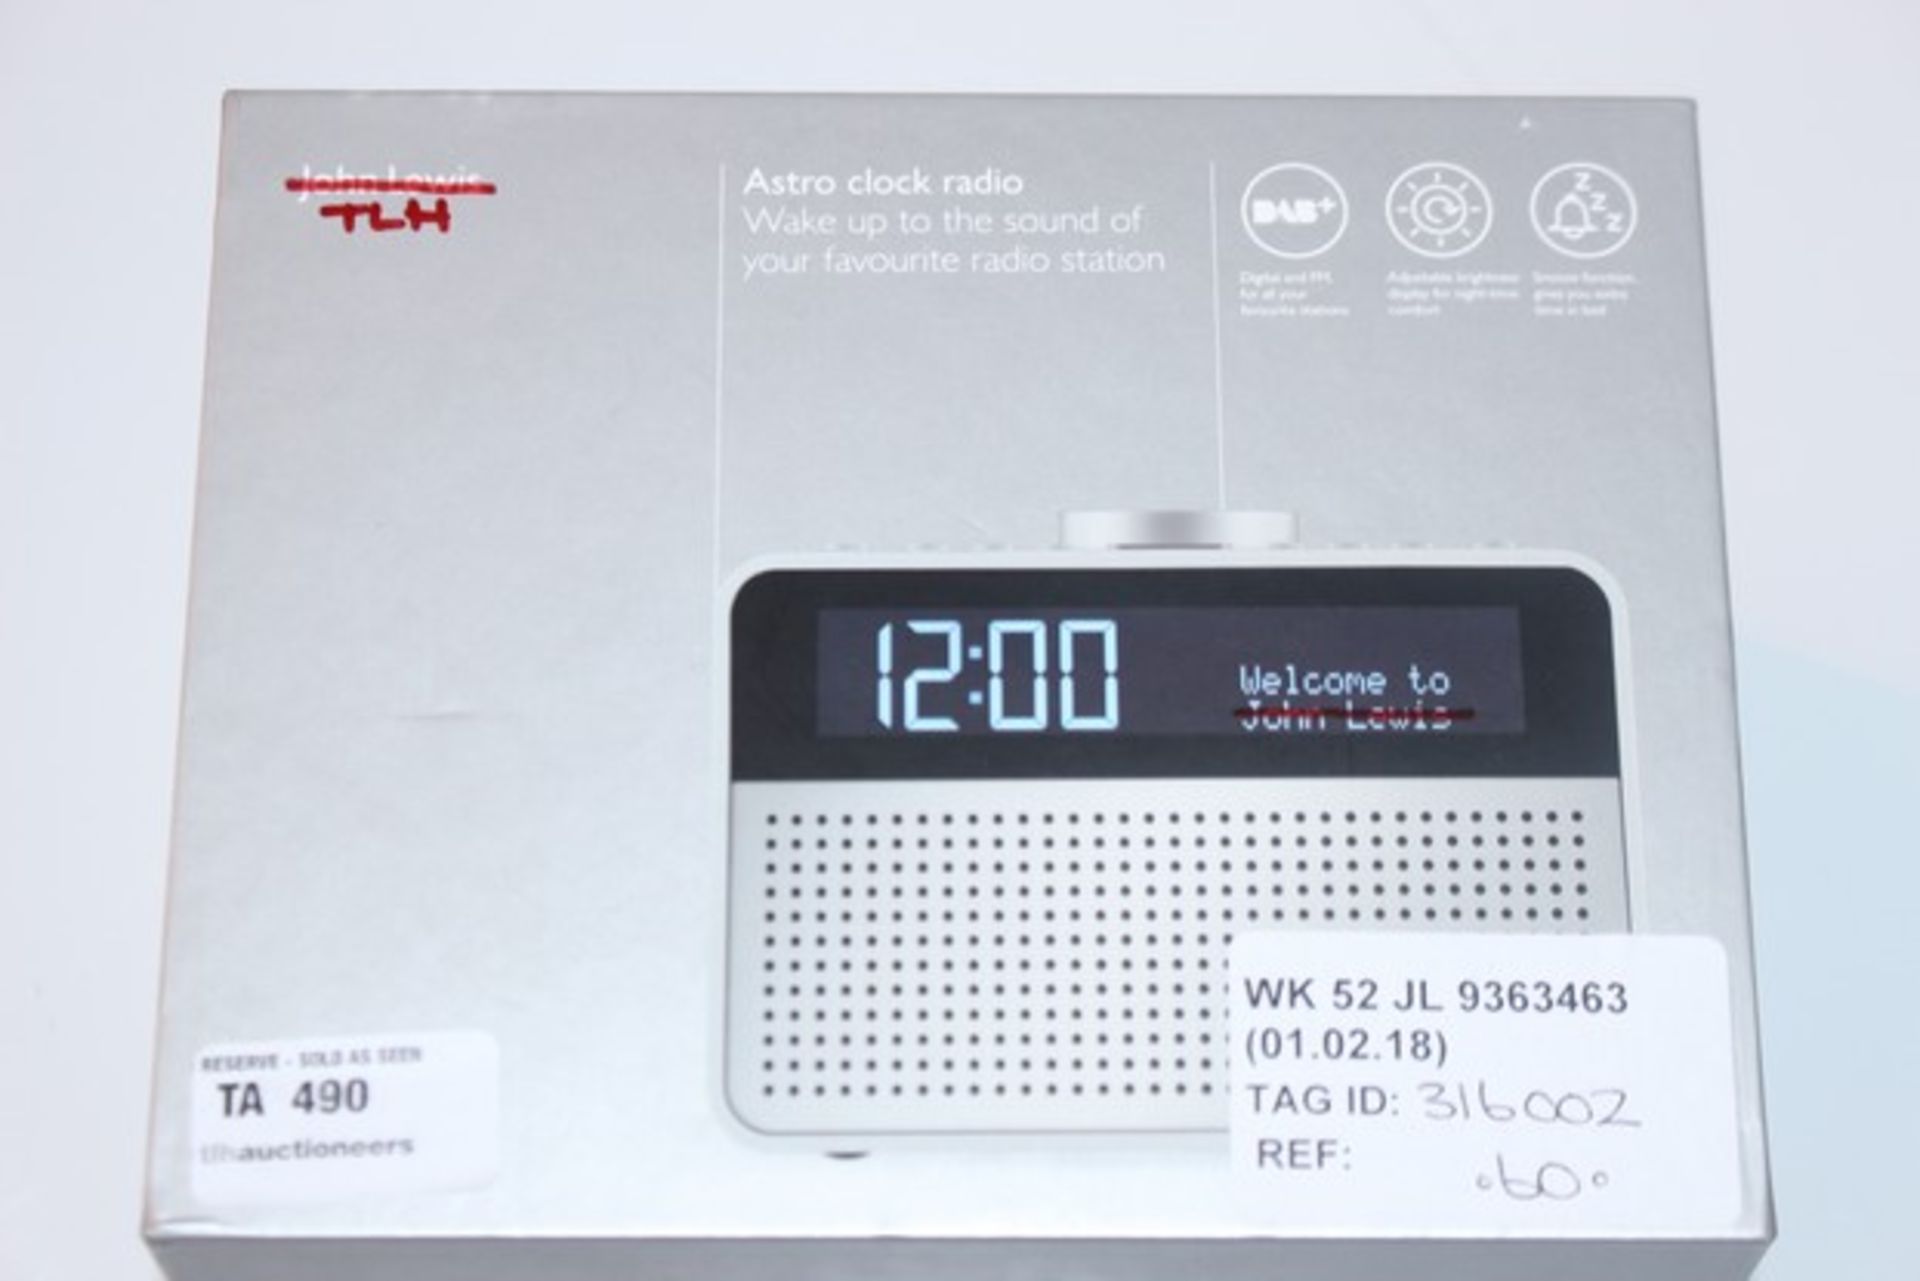 1X ASTRO CLOCK RADIO DIGITAL FM DAB RADIO RRP £60 (01/02/18) (316002)